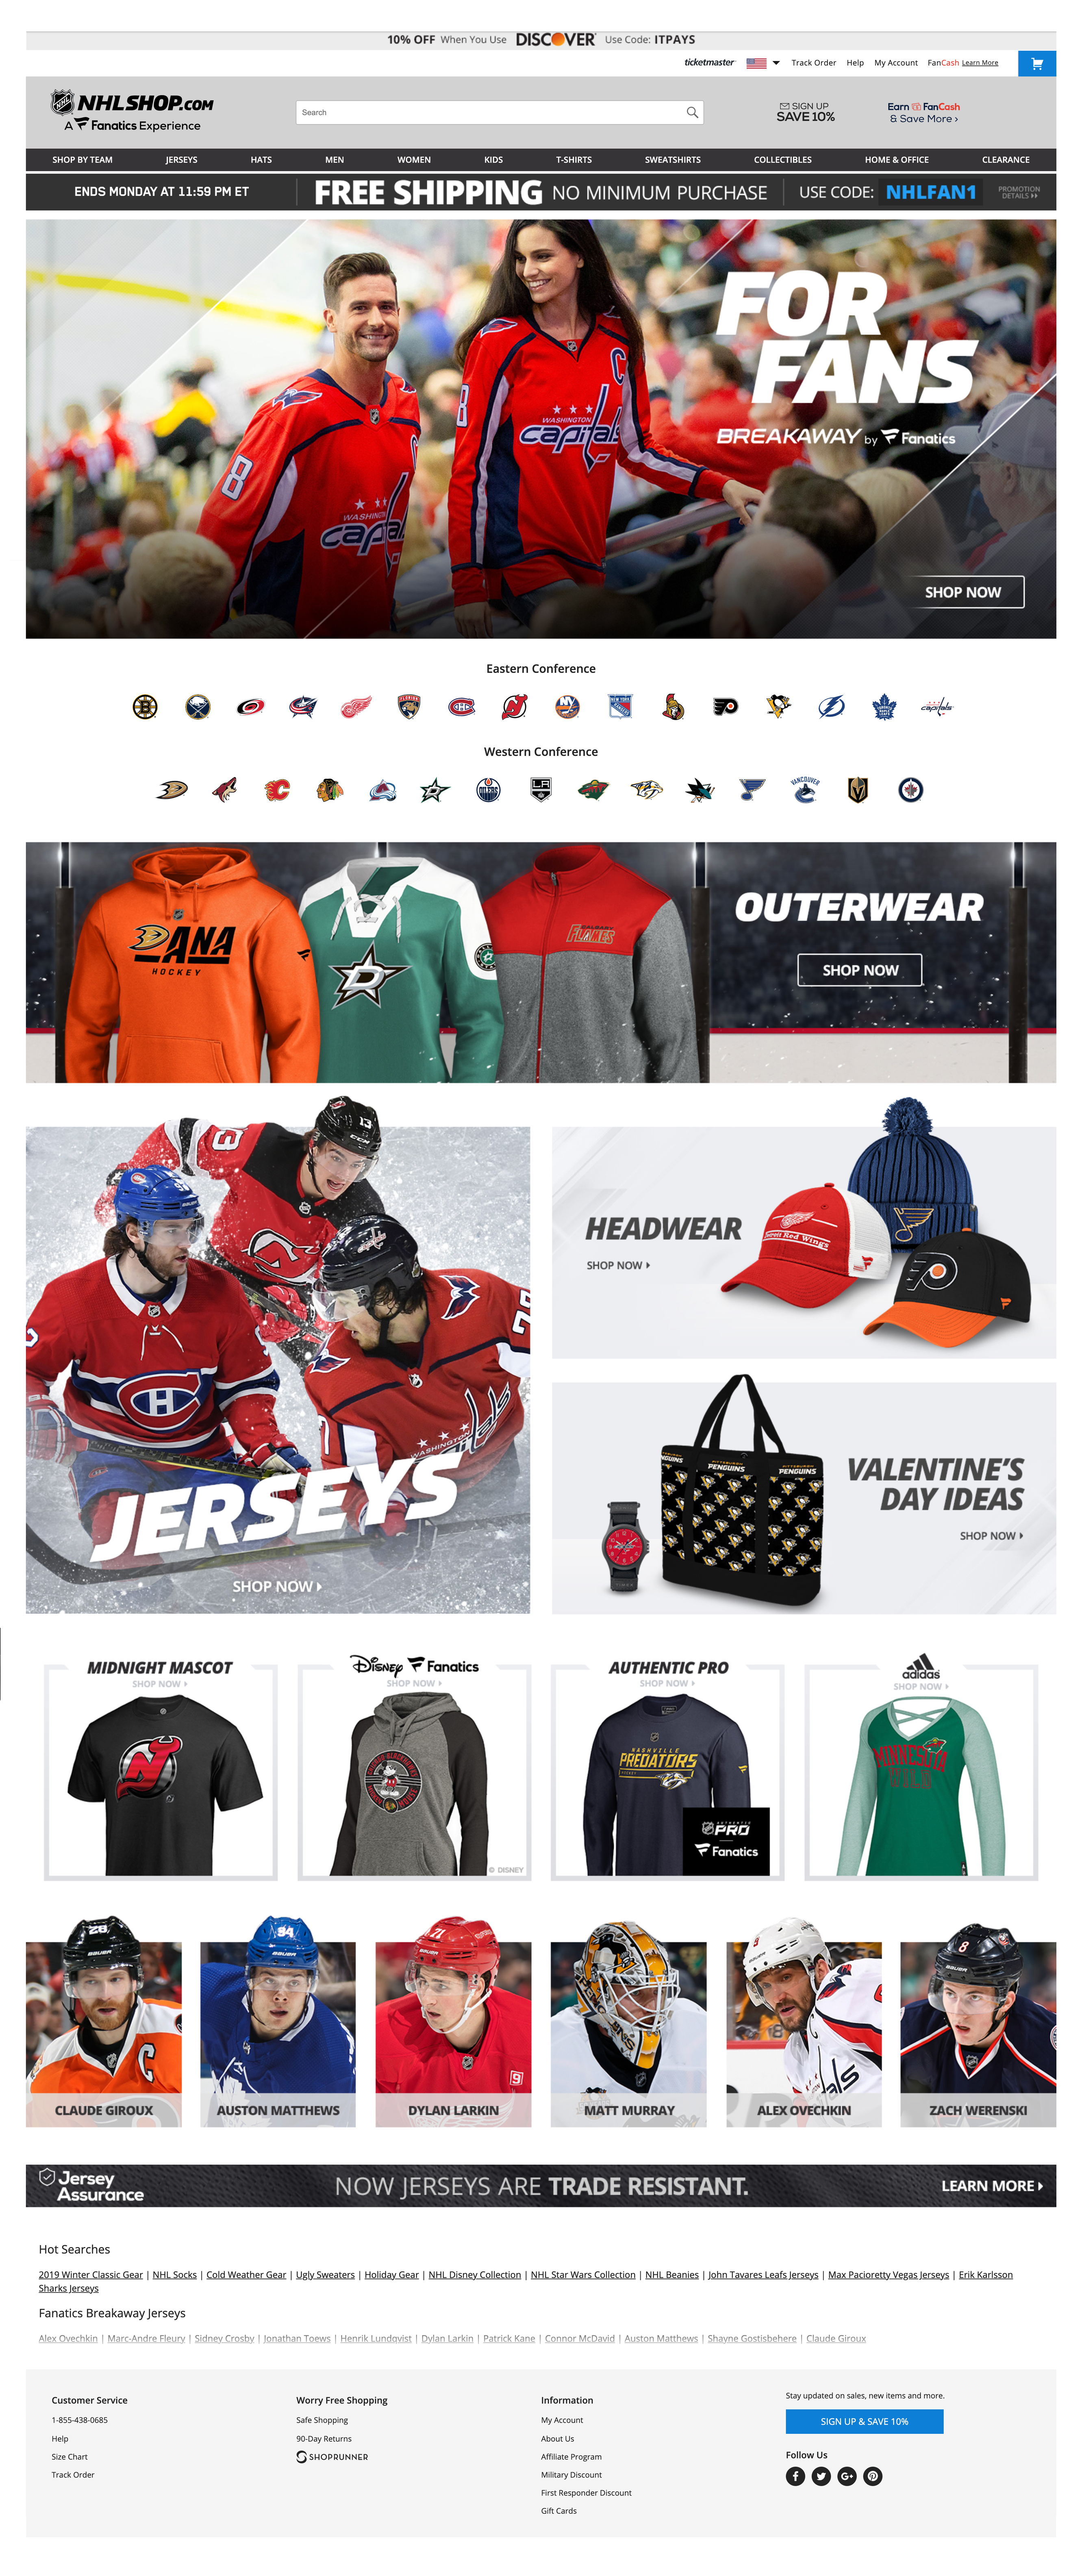 NHL shop Fanatics